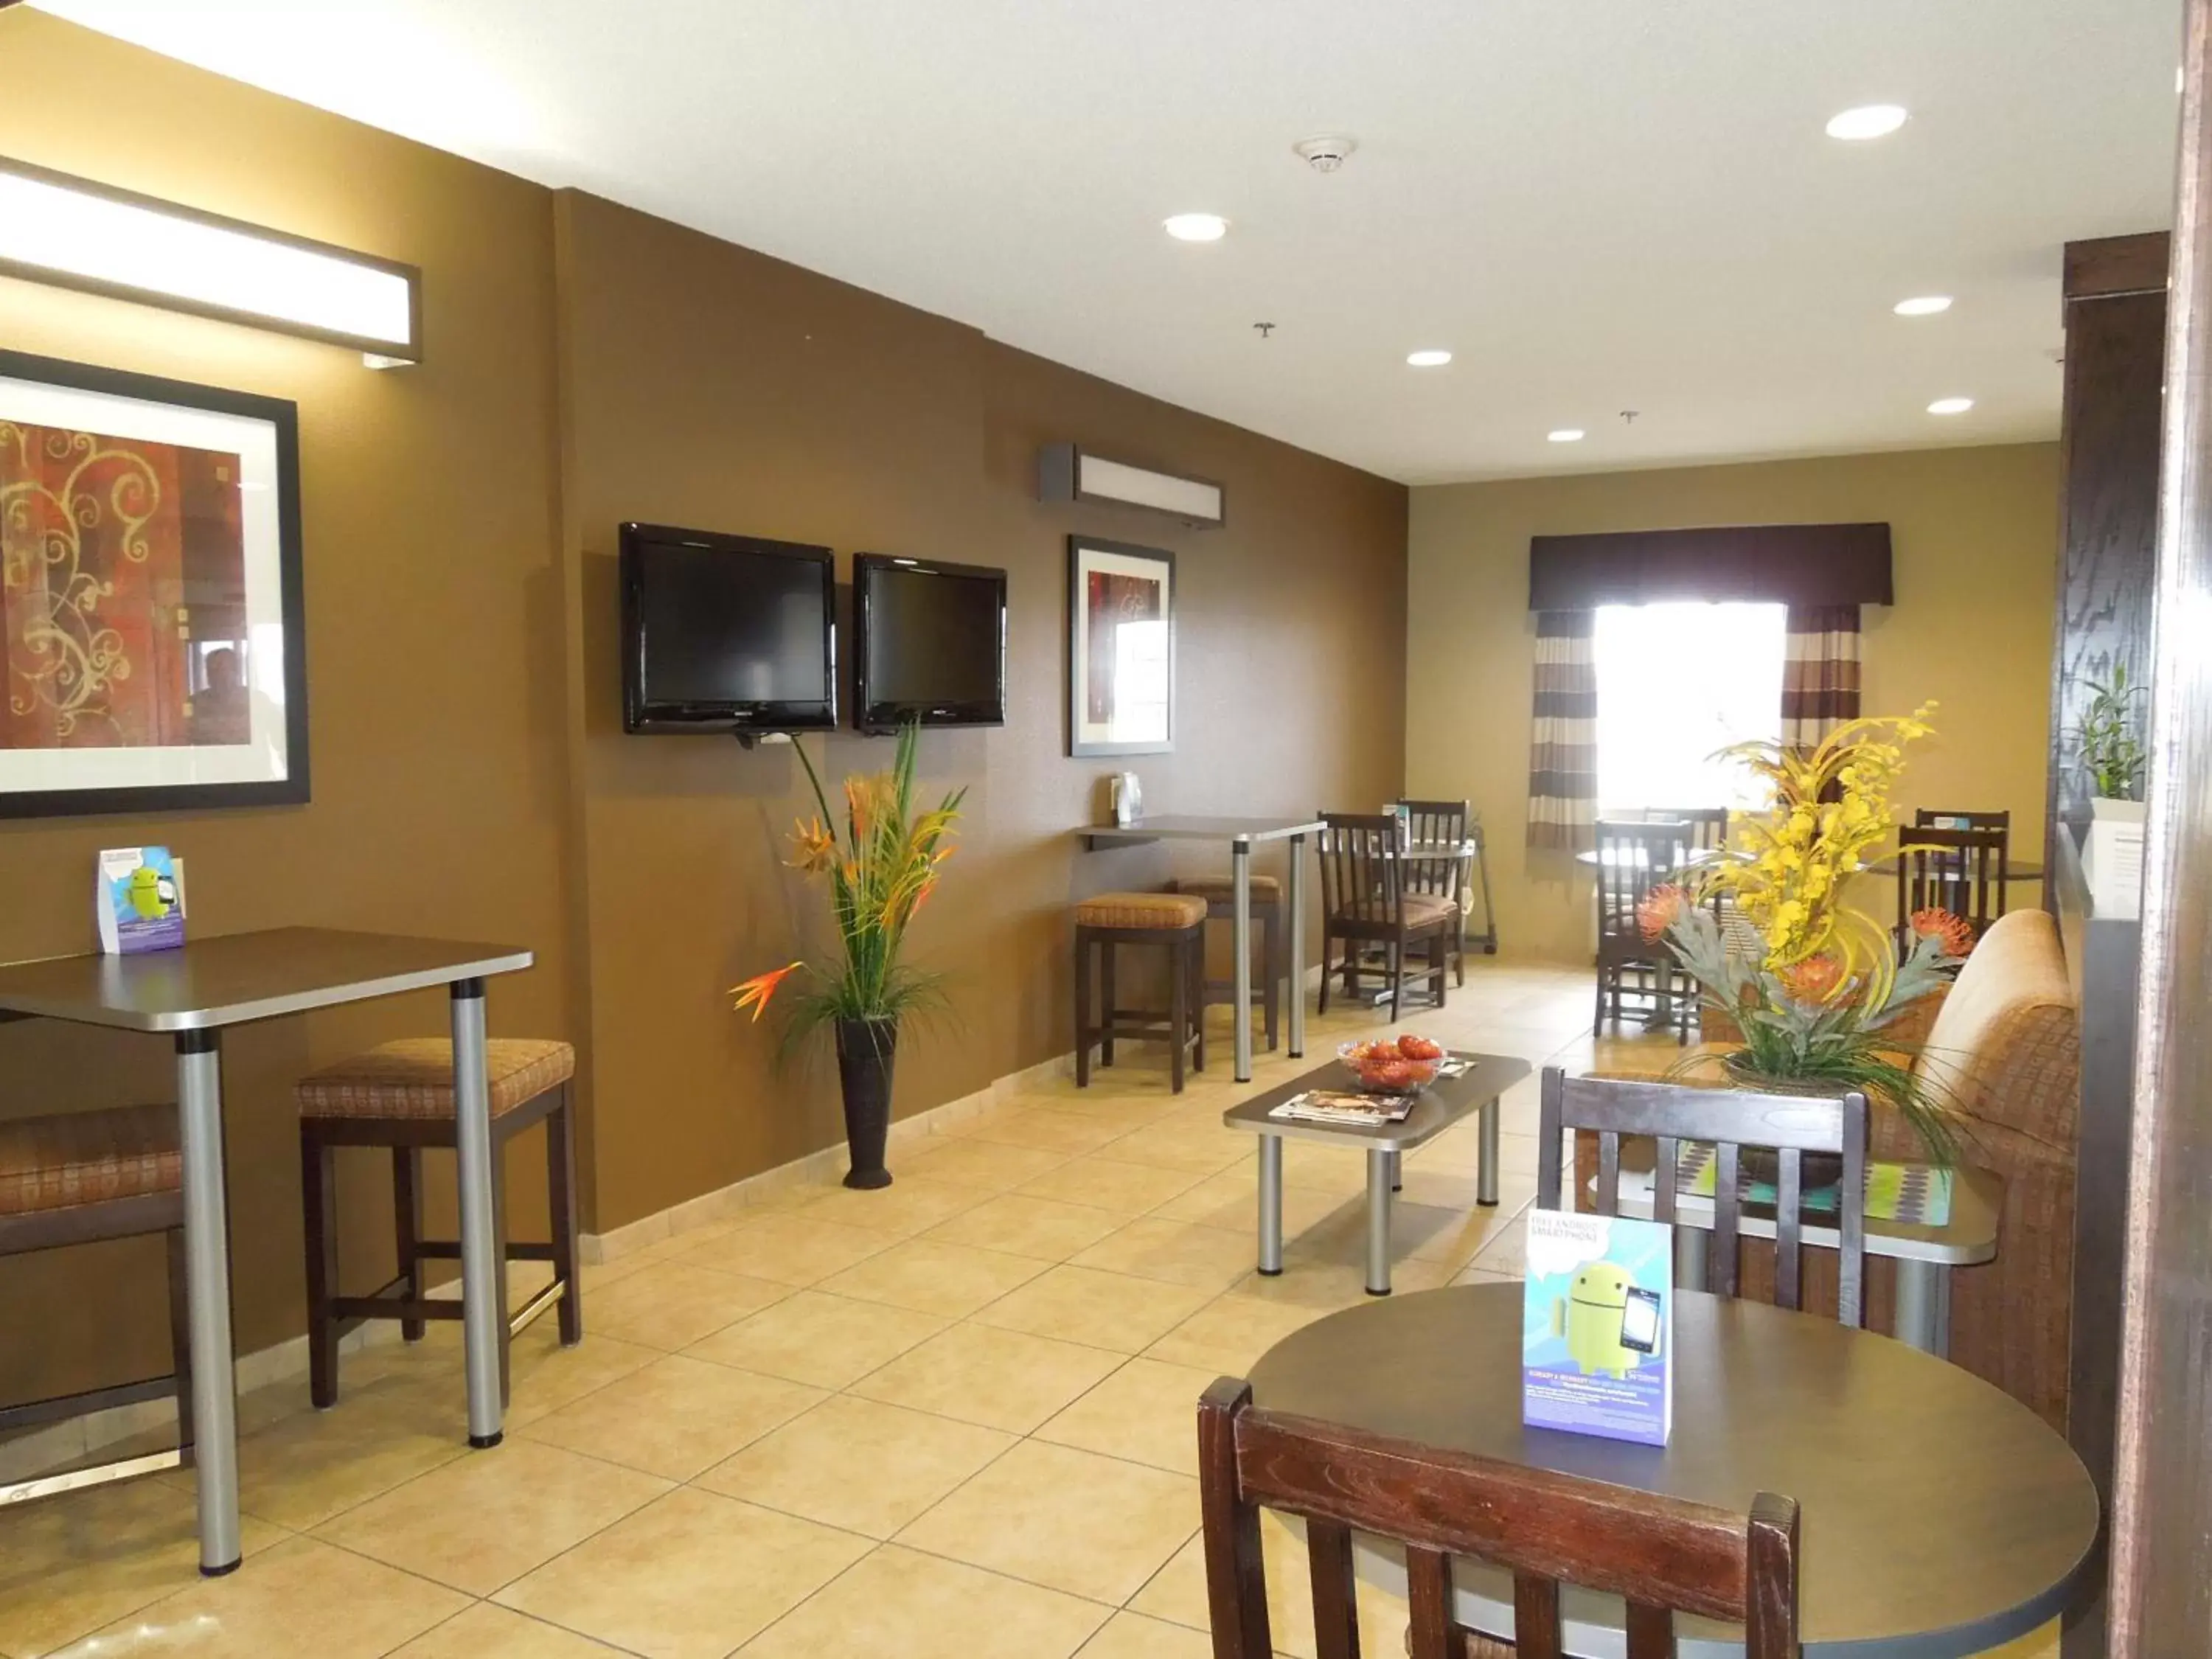 Lobby or reception in Microtel Inn & Suites by Wyndham Harrisonburg